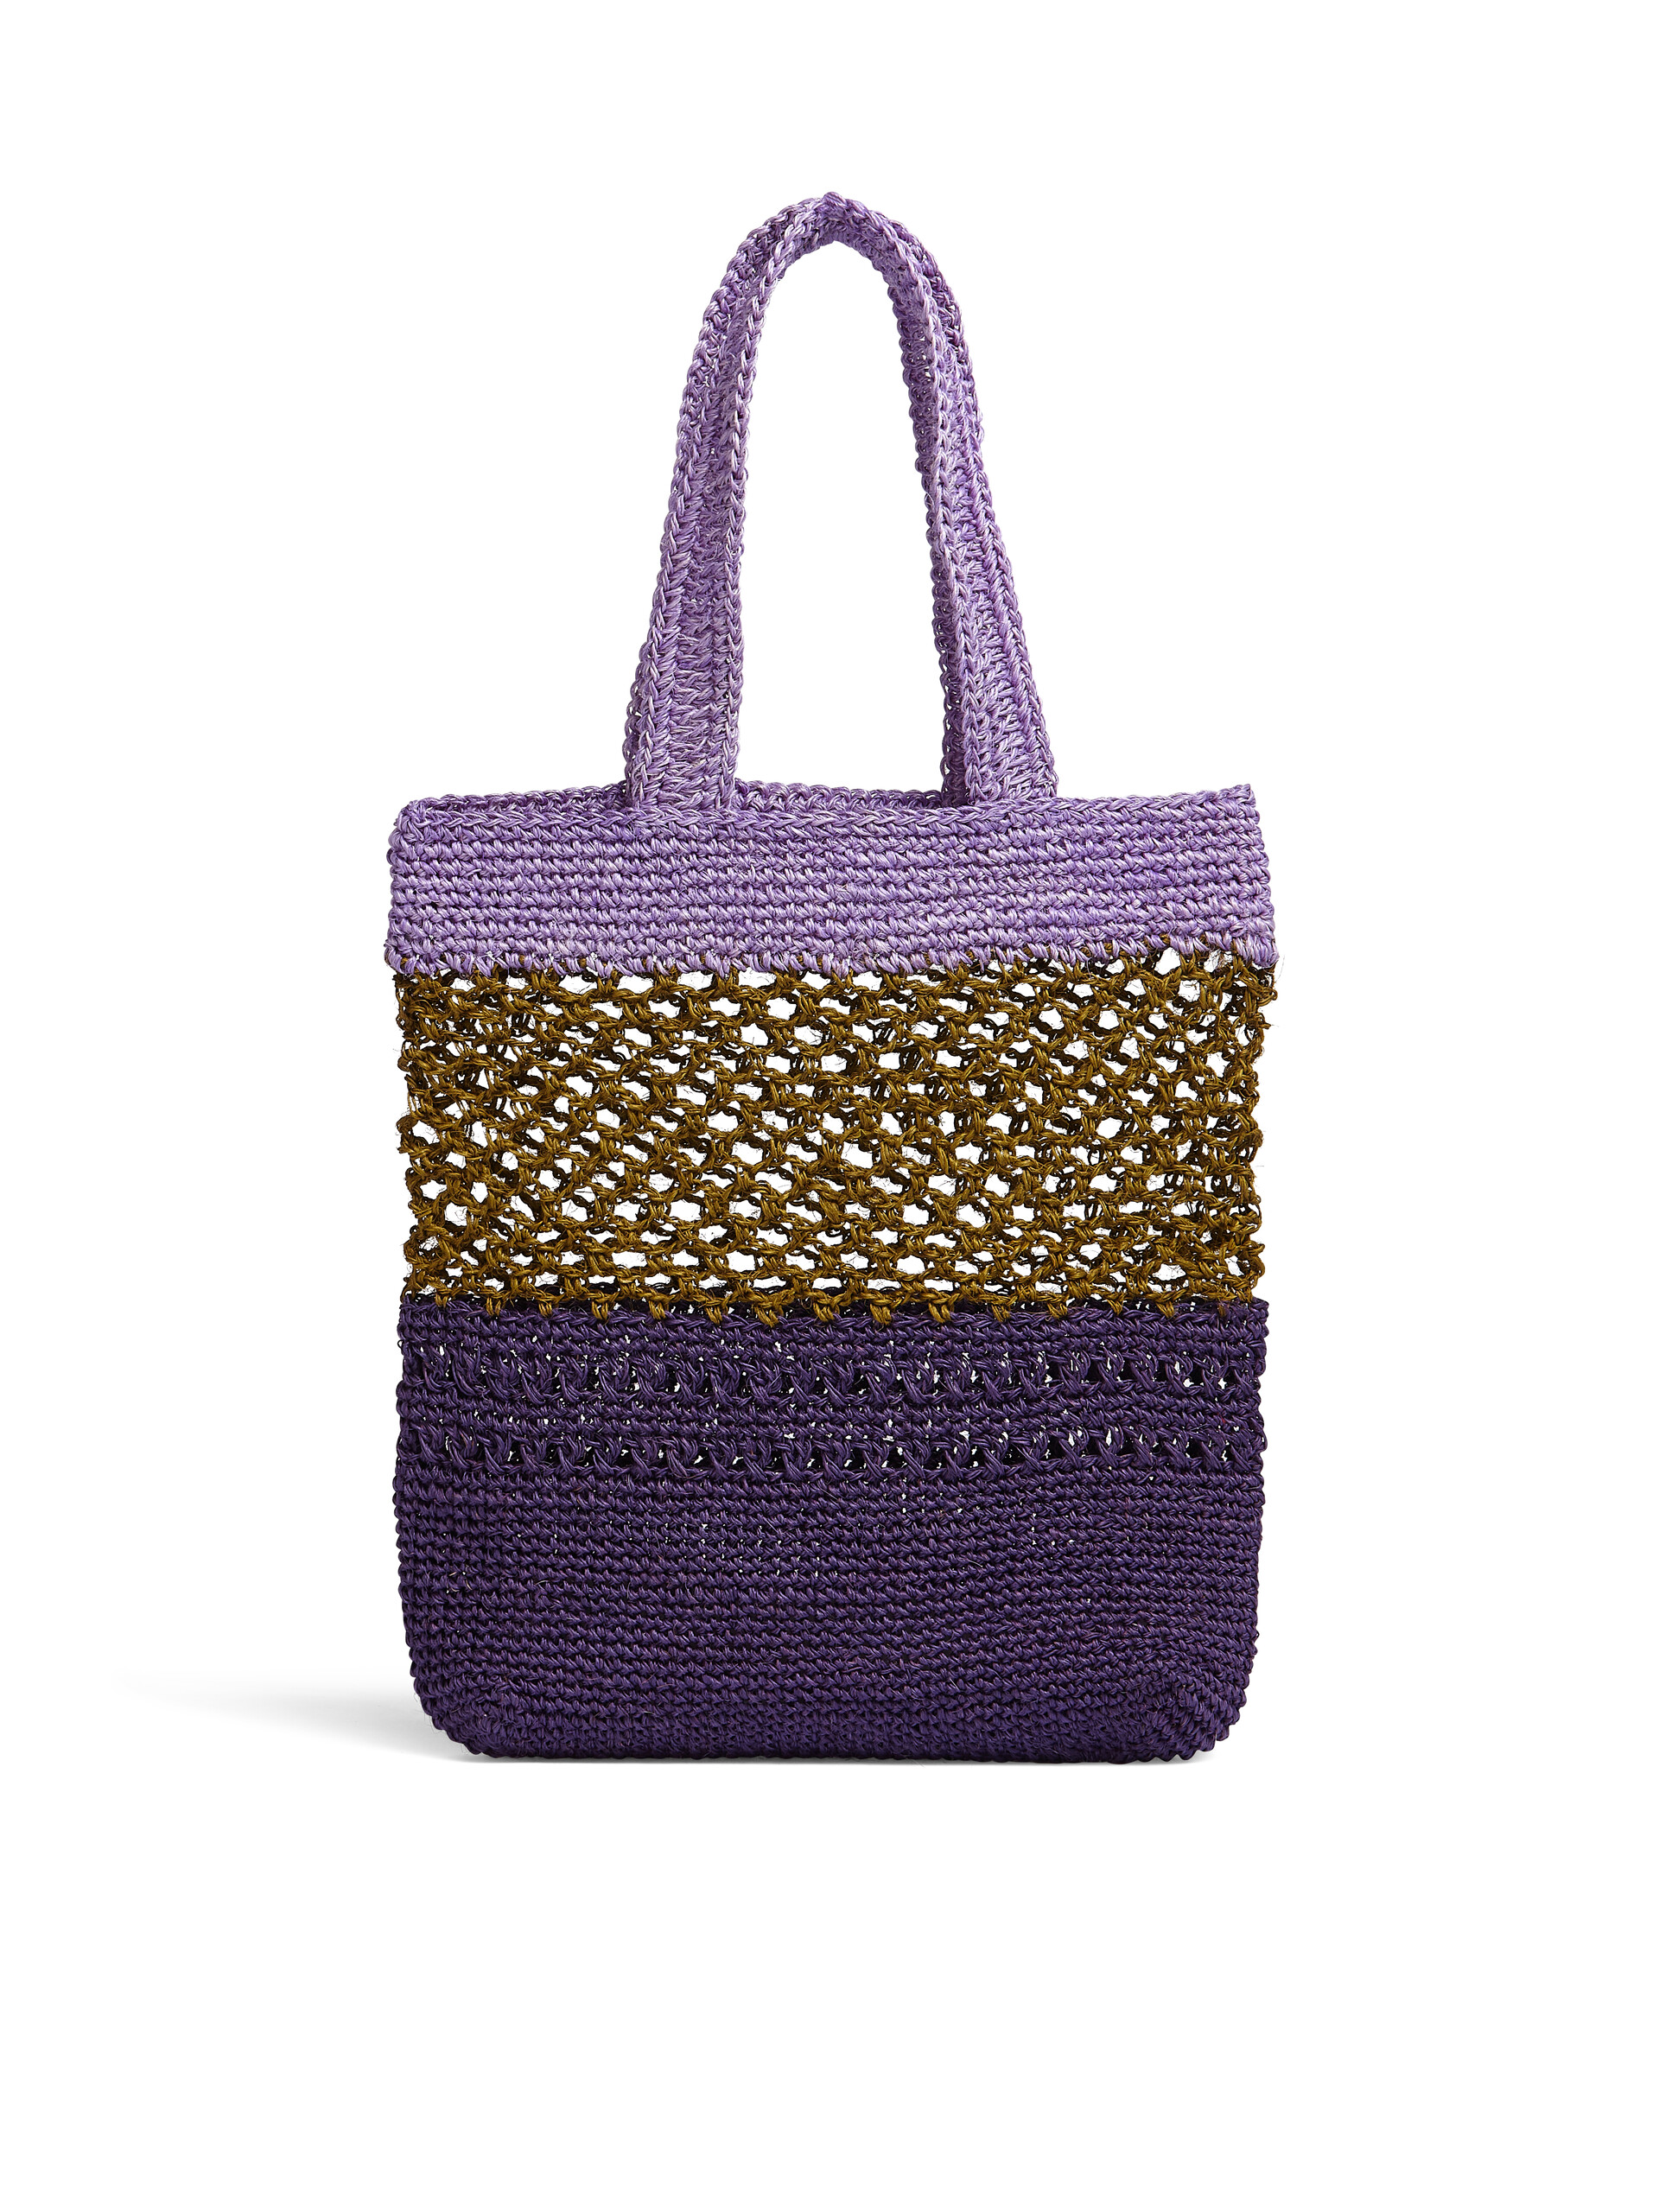 MARNI MARKET bag in purple and green natural fiber - Bags - Image 3